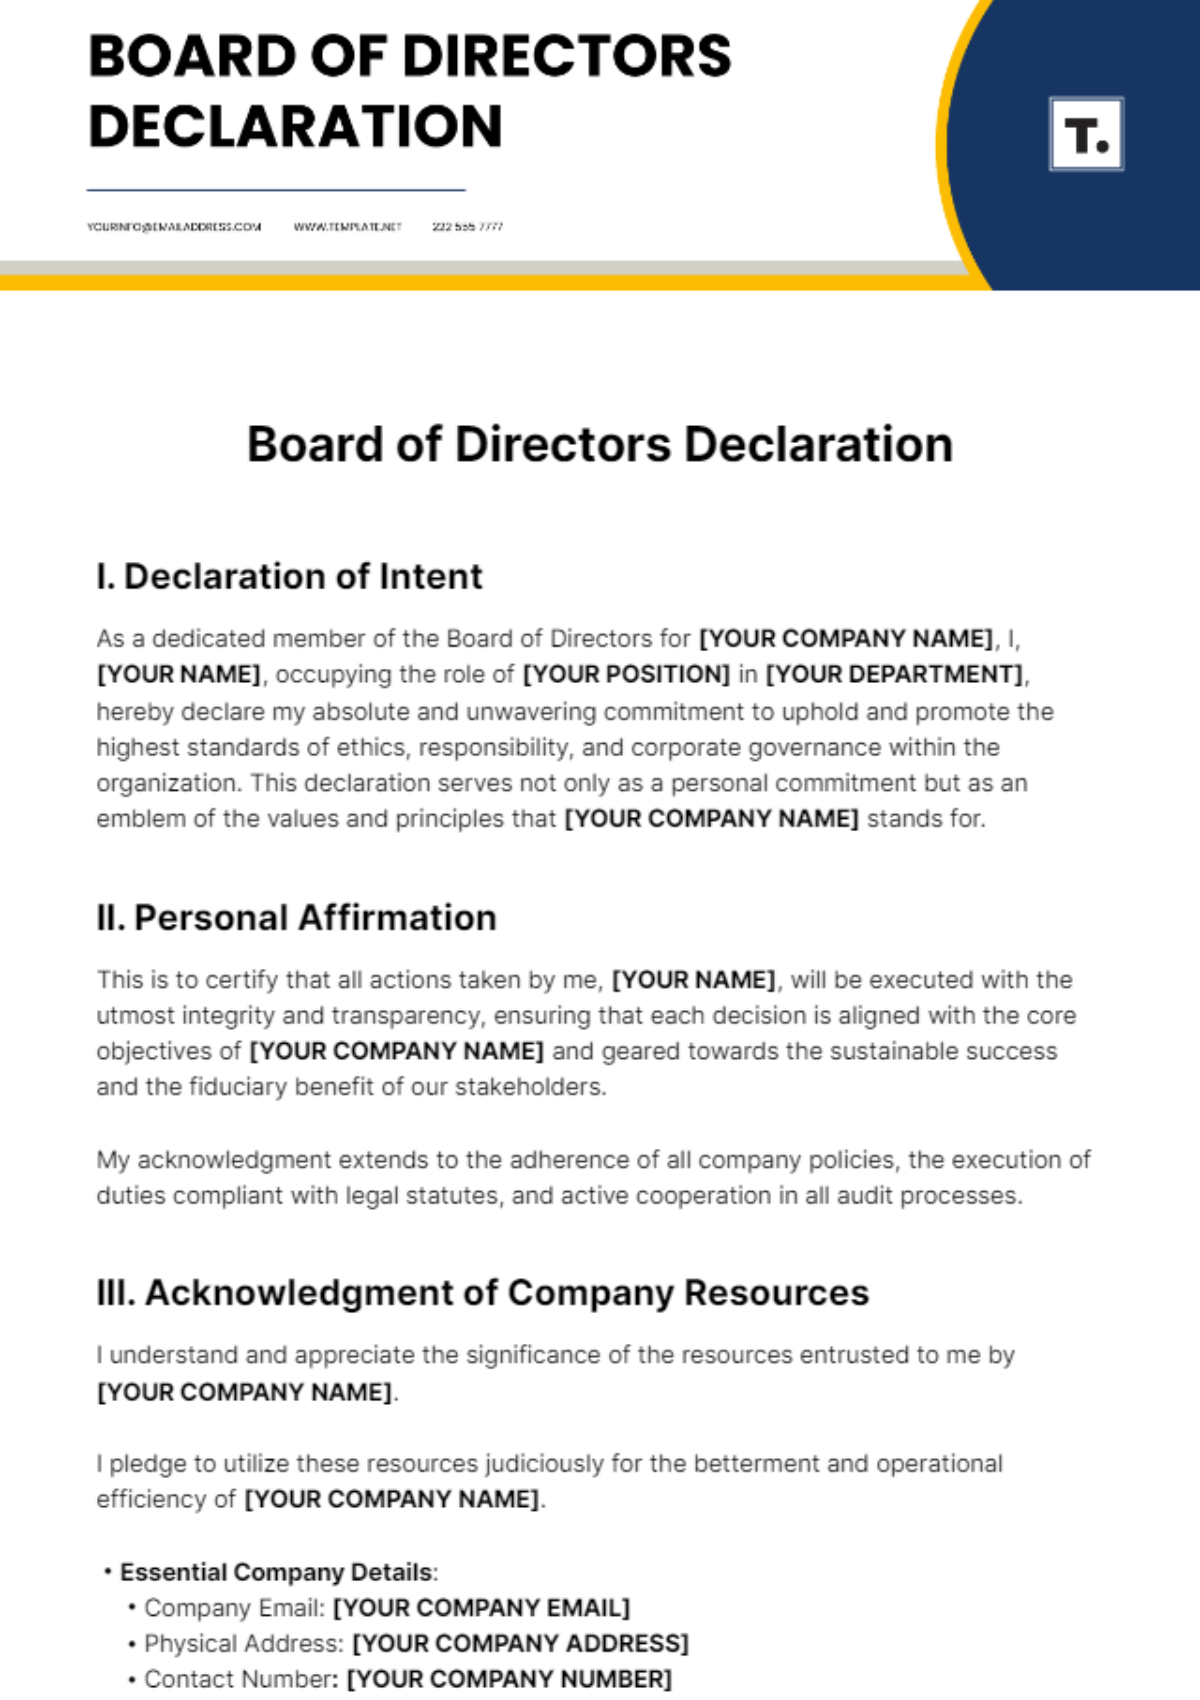 Board of Directors Declaration Template